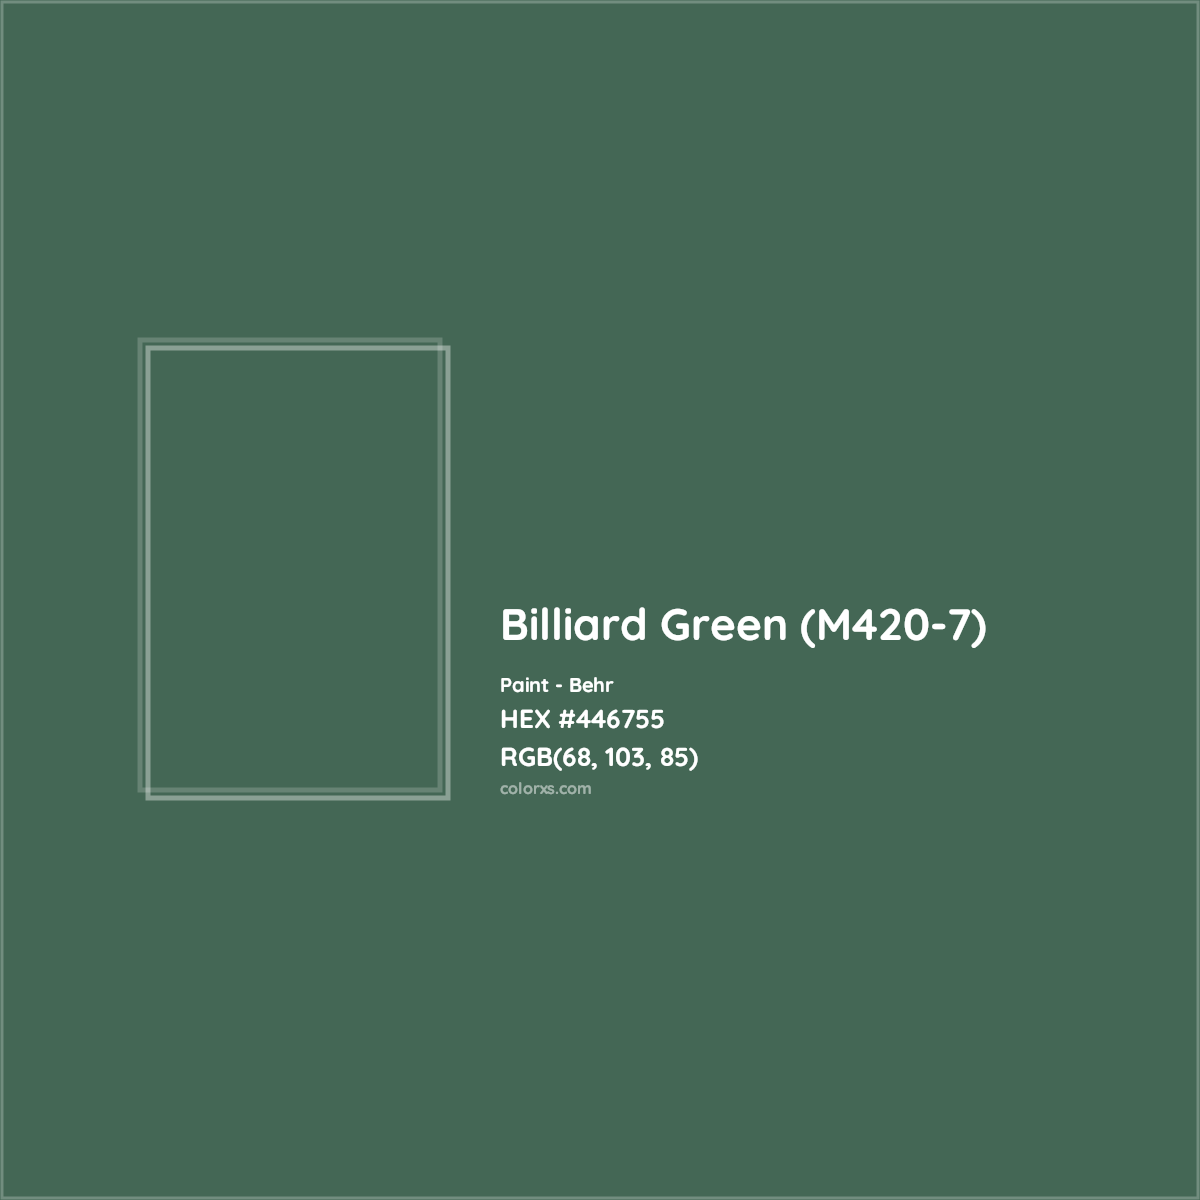 HEX #446755 Billiard Green (M420-7) Paint Behr - Color Code